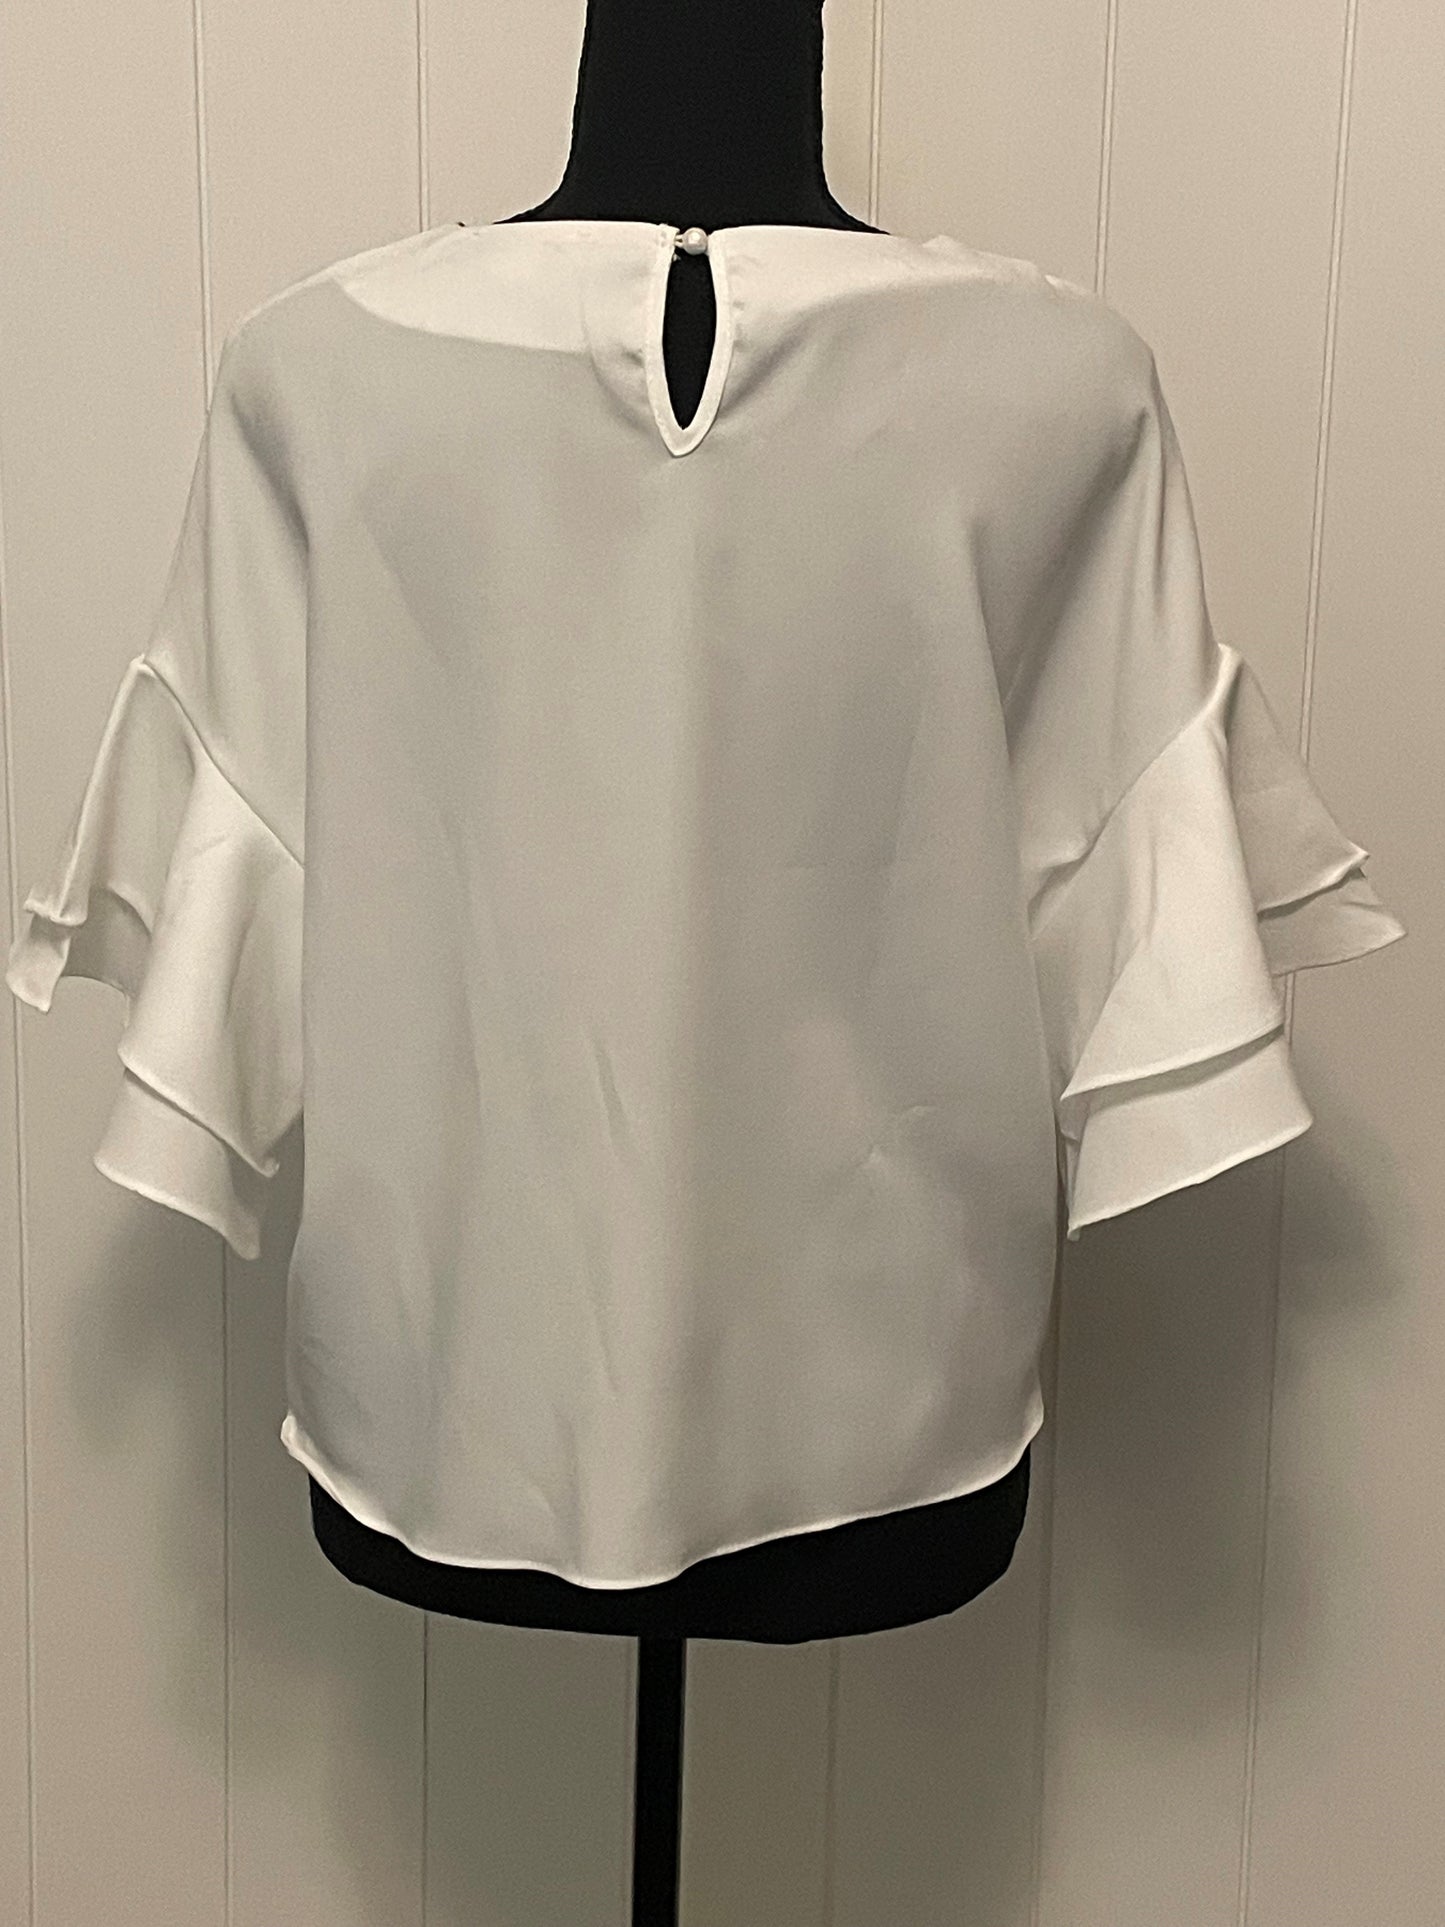 Size Small - Favlux White blouse